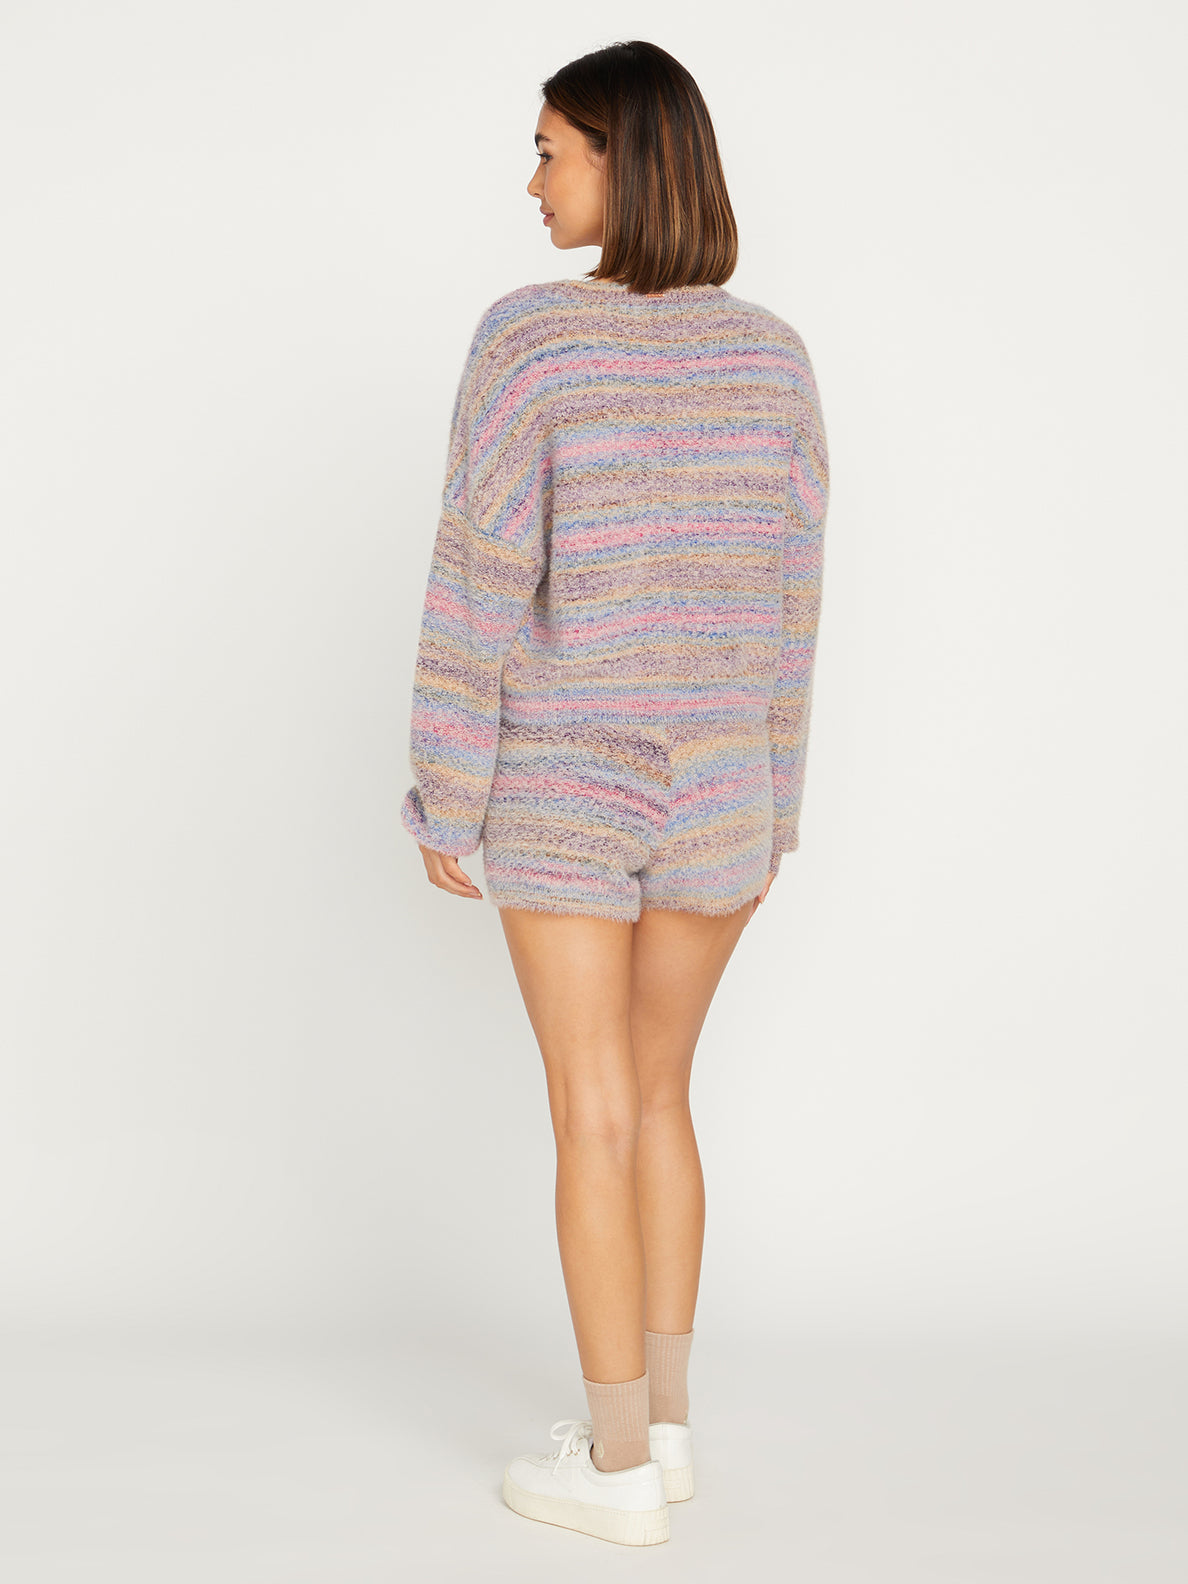 Quween Beach Sweater - Multi (B0712302_MLT) [B]